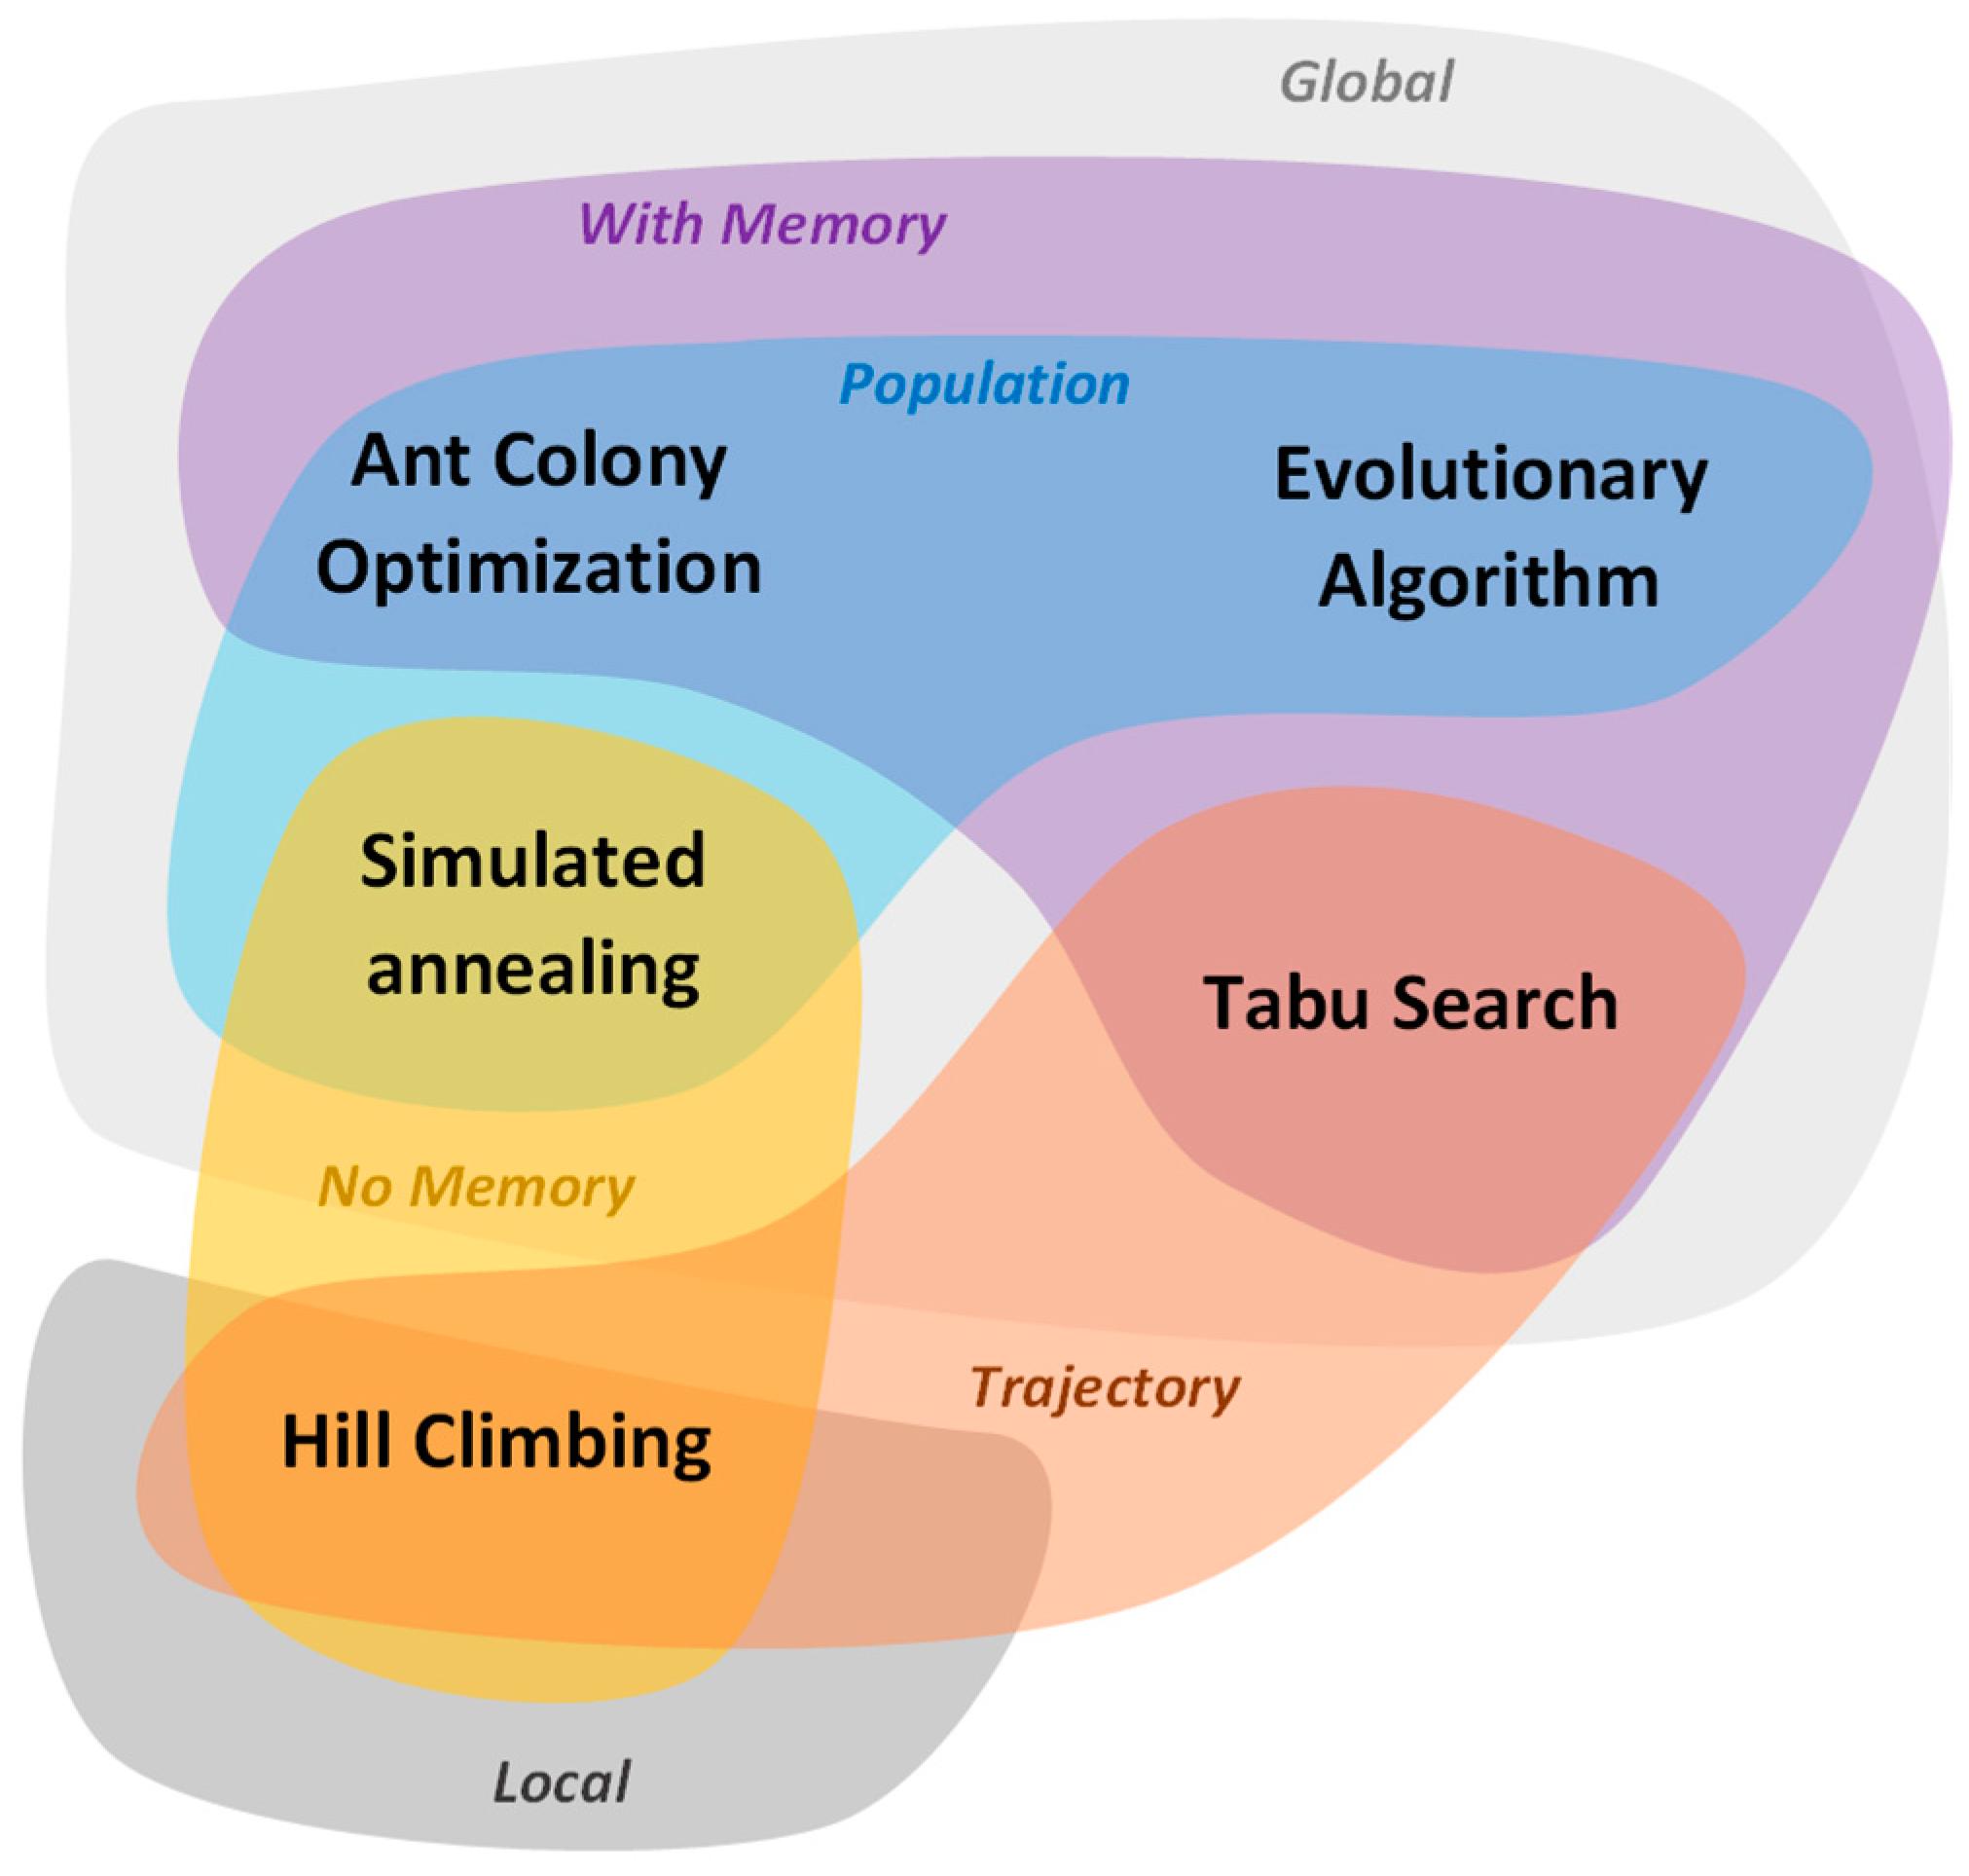 evolutionary algorithms solar energy - What is the evolutionary algorithm